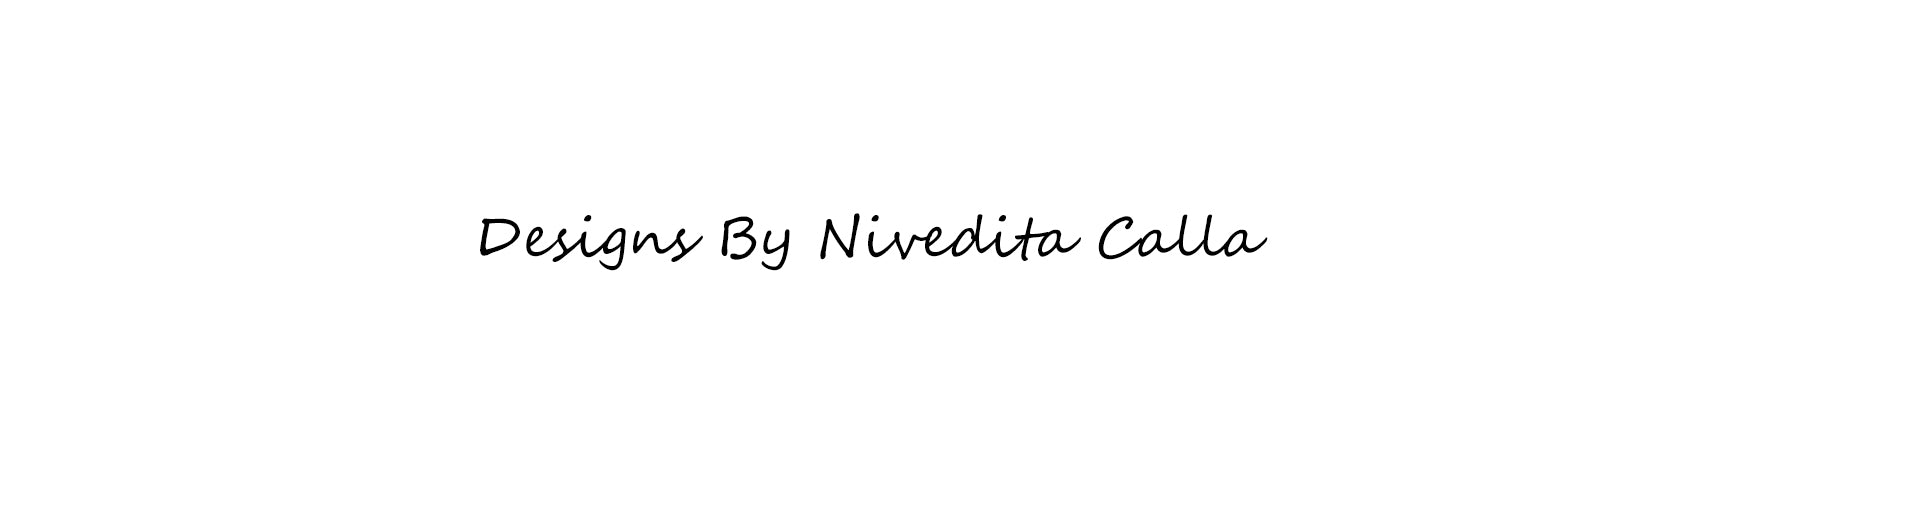 Nivedita Calla